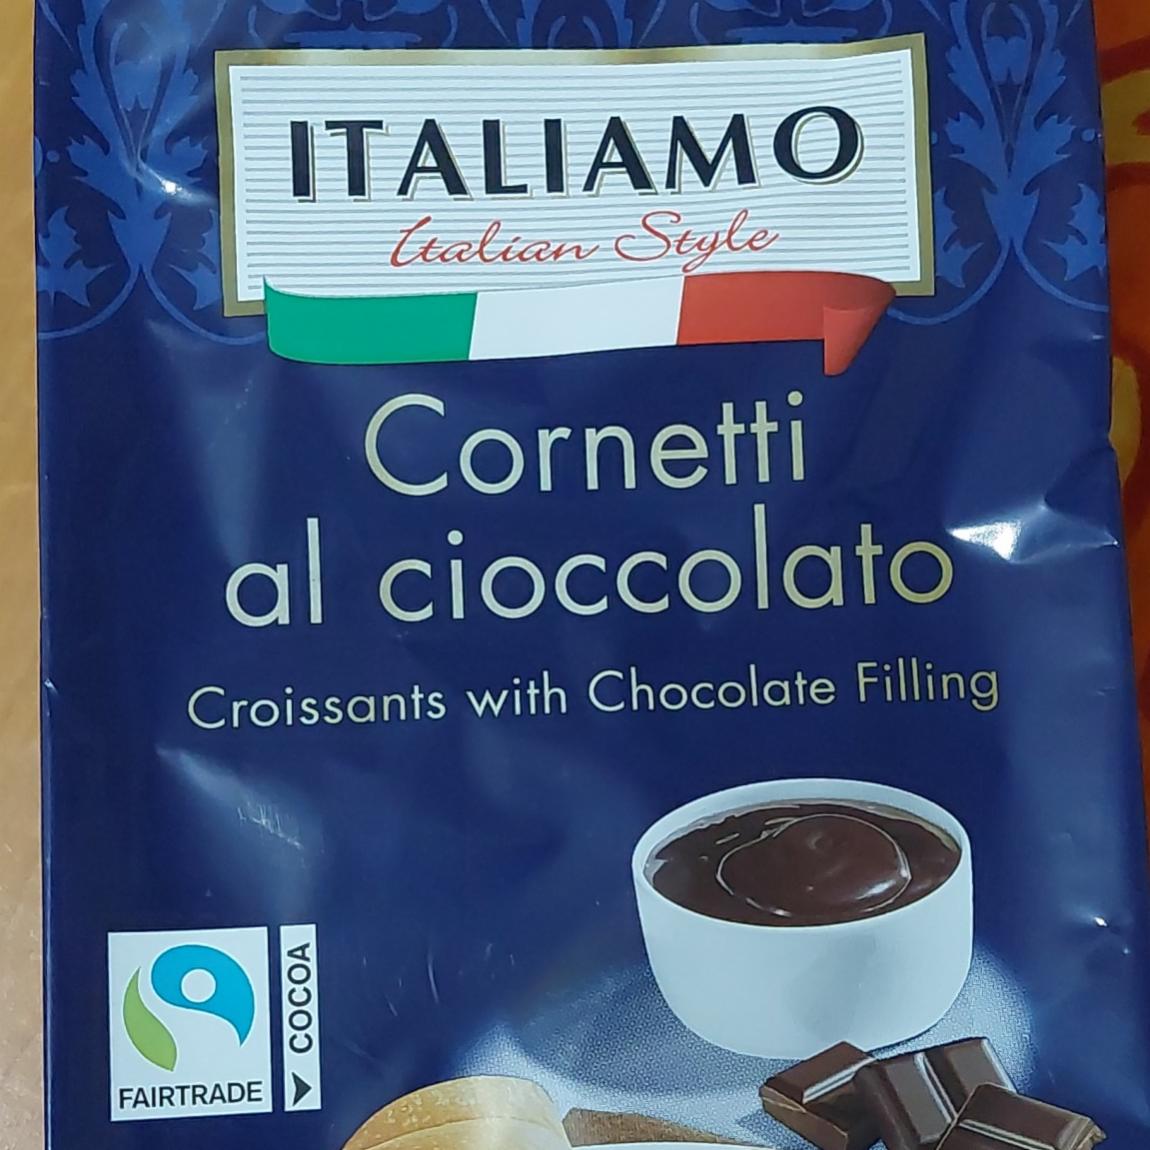 Képek - Cornetti al cioccolato Italiamo